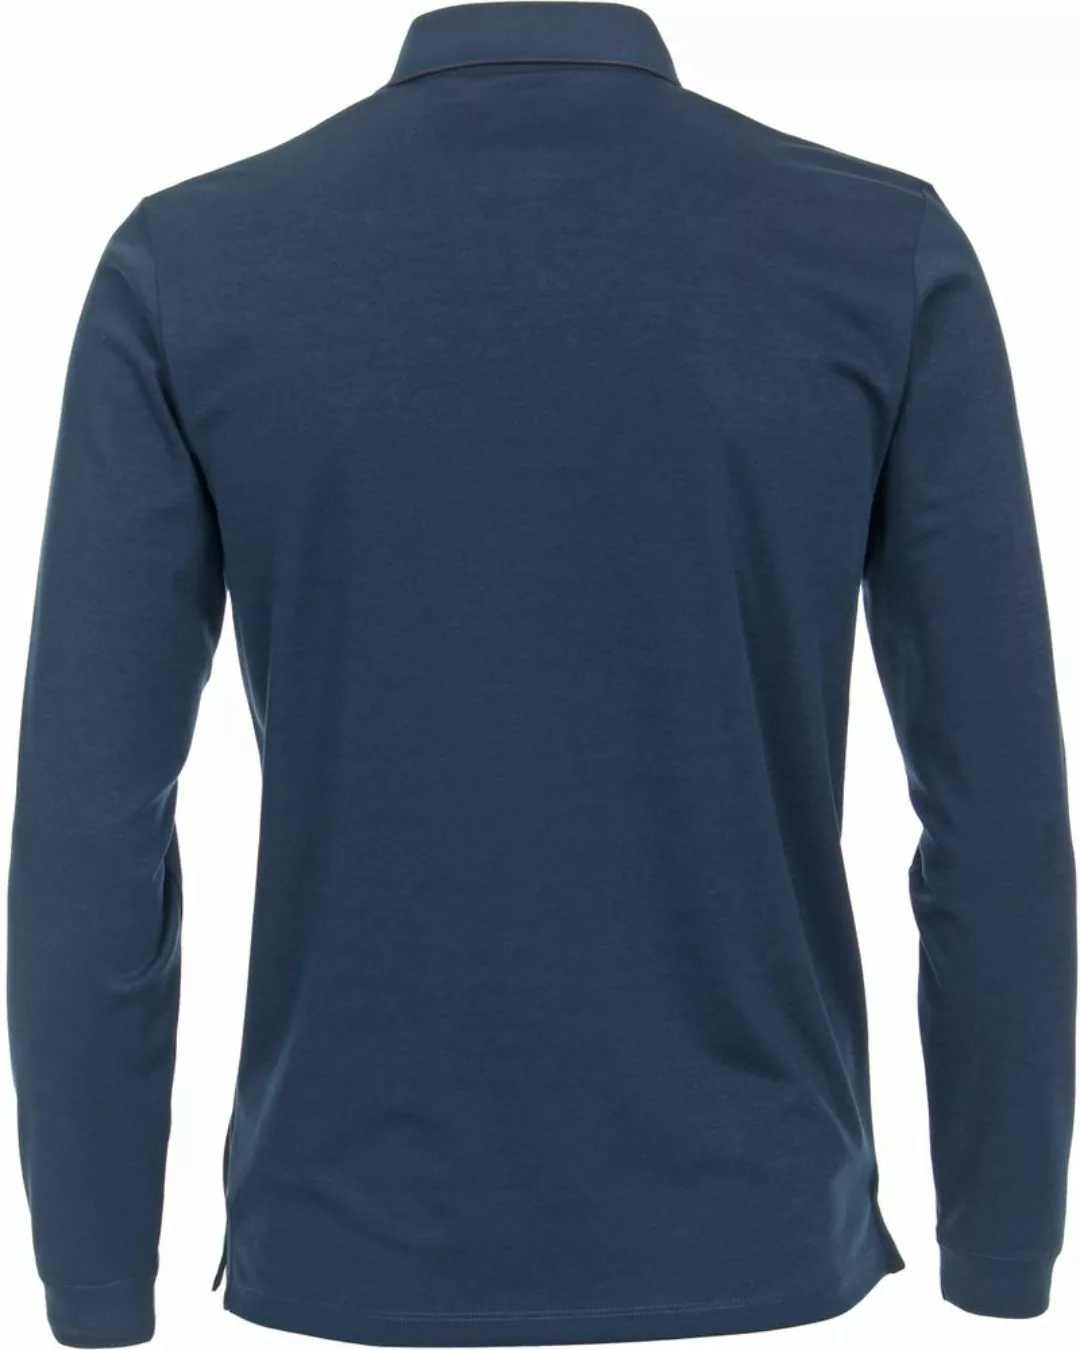 Casa Moda Long Sleeve Poloshirt Navy - Größe 4XL günstig online kaufen